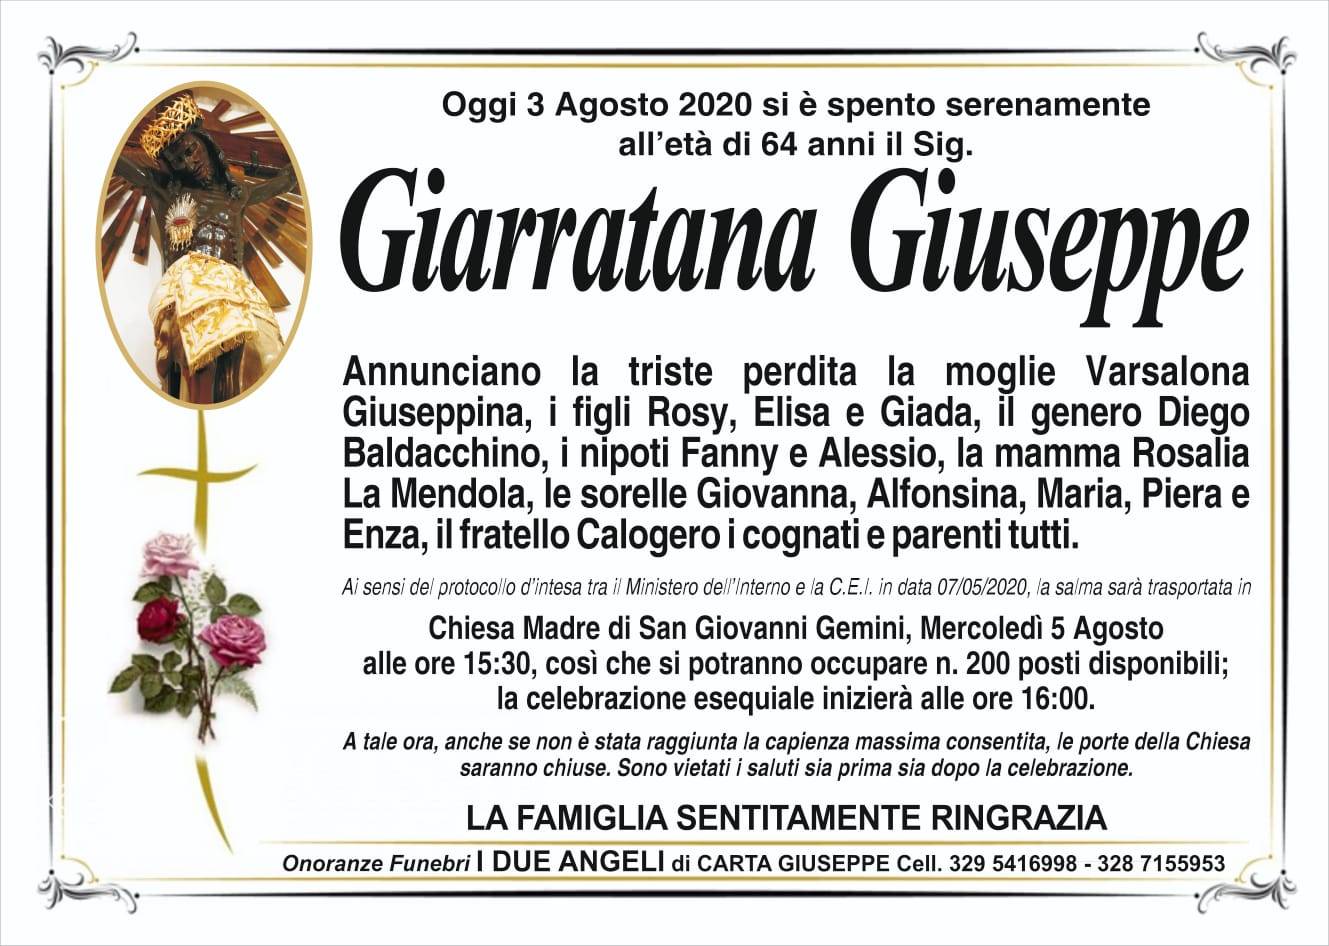 Giuseppe Giarratana